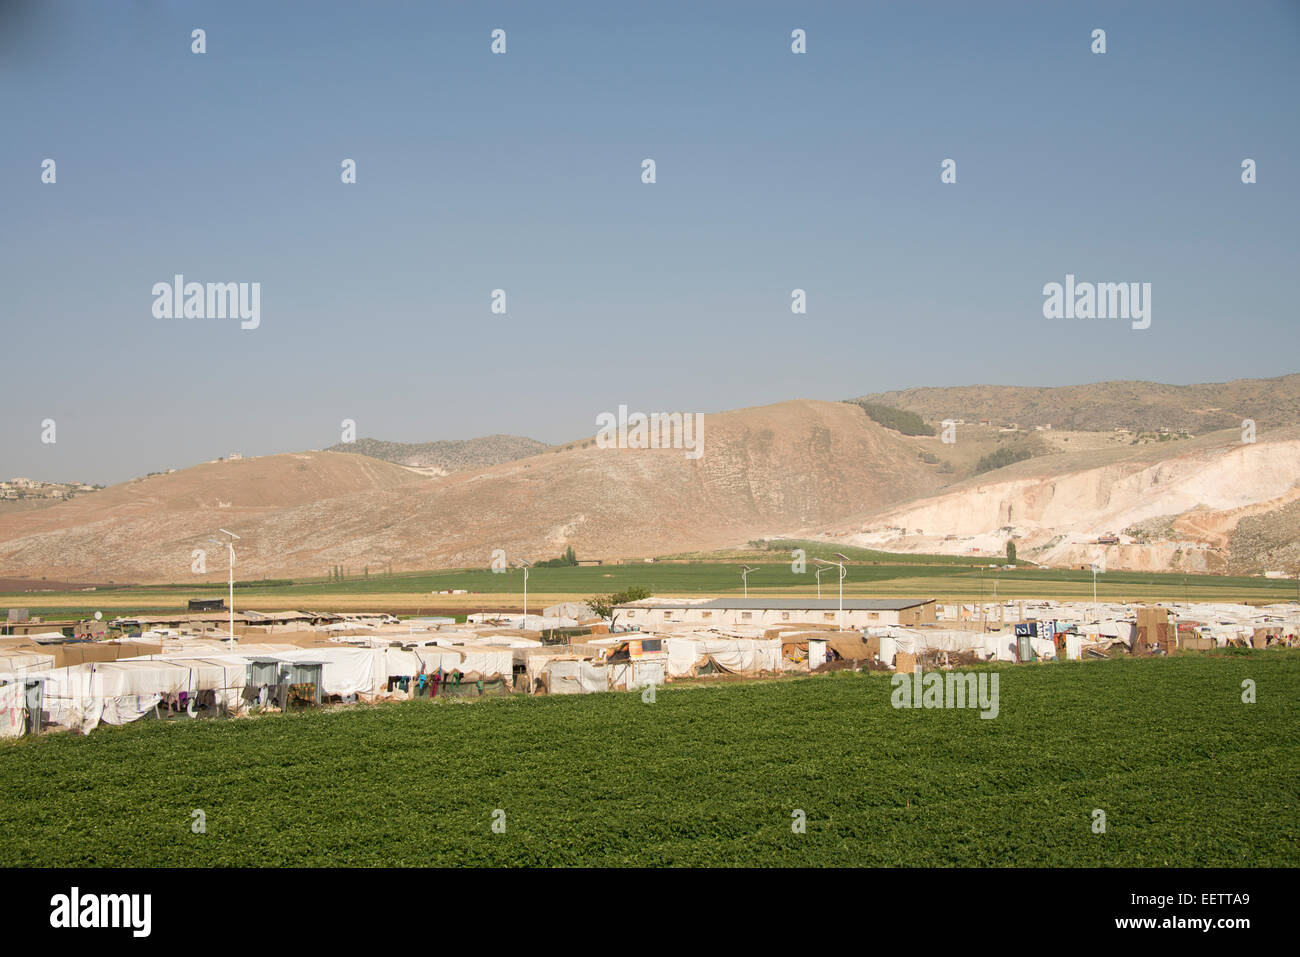 Tentes de réfugiés syriens, vallée de la Bekaa, au Liban Banque D'Images